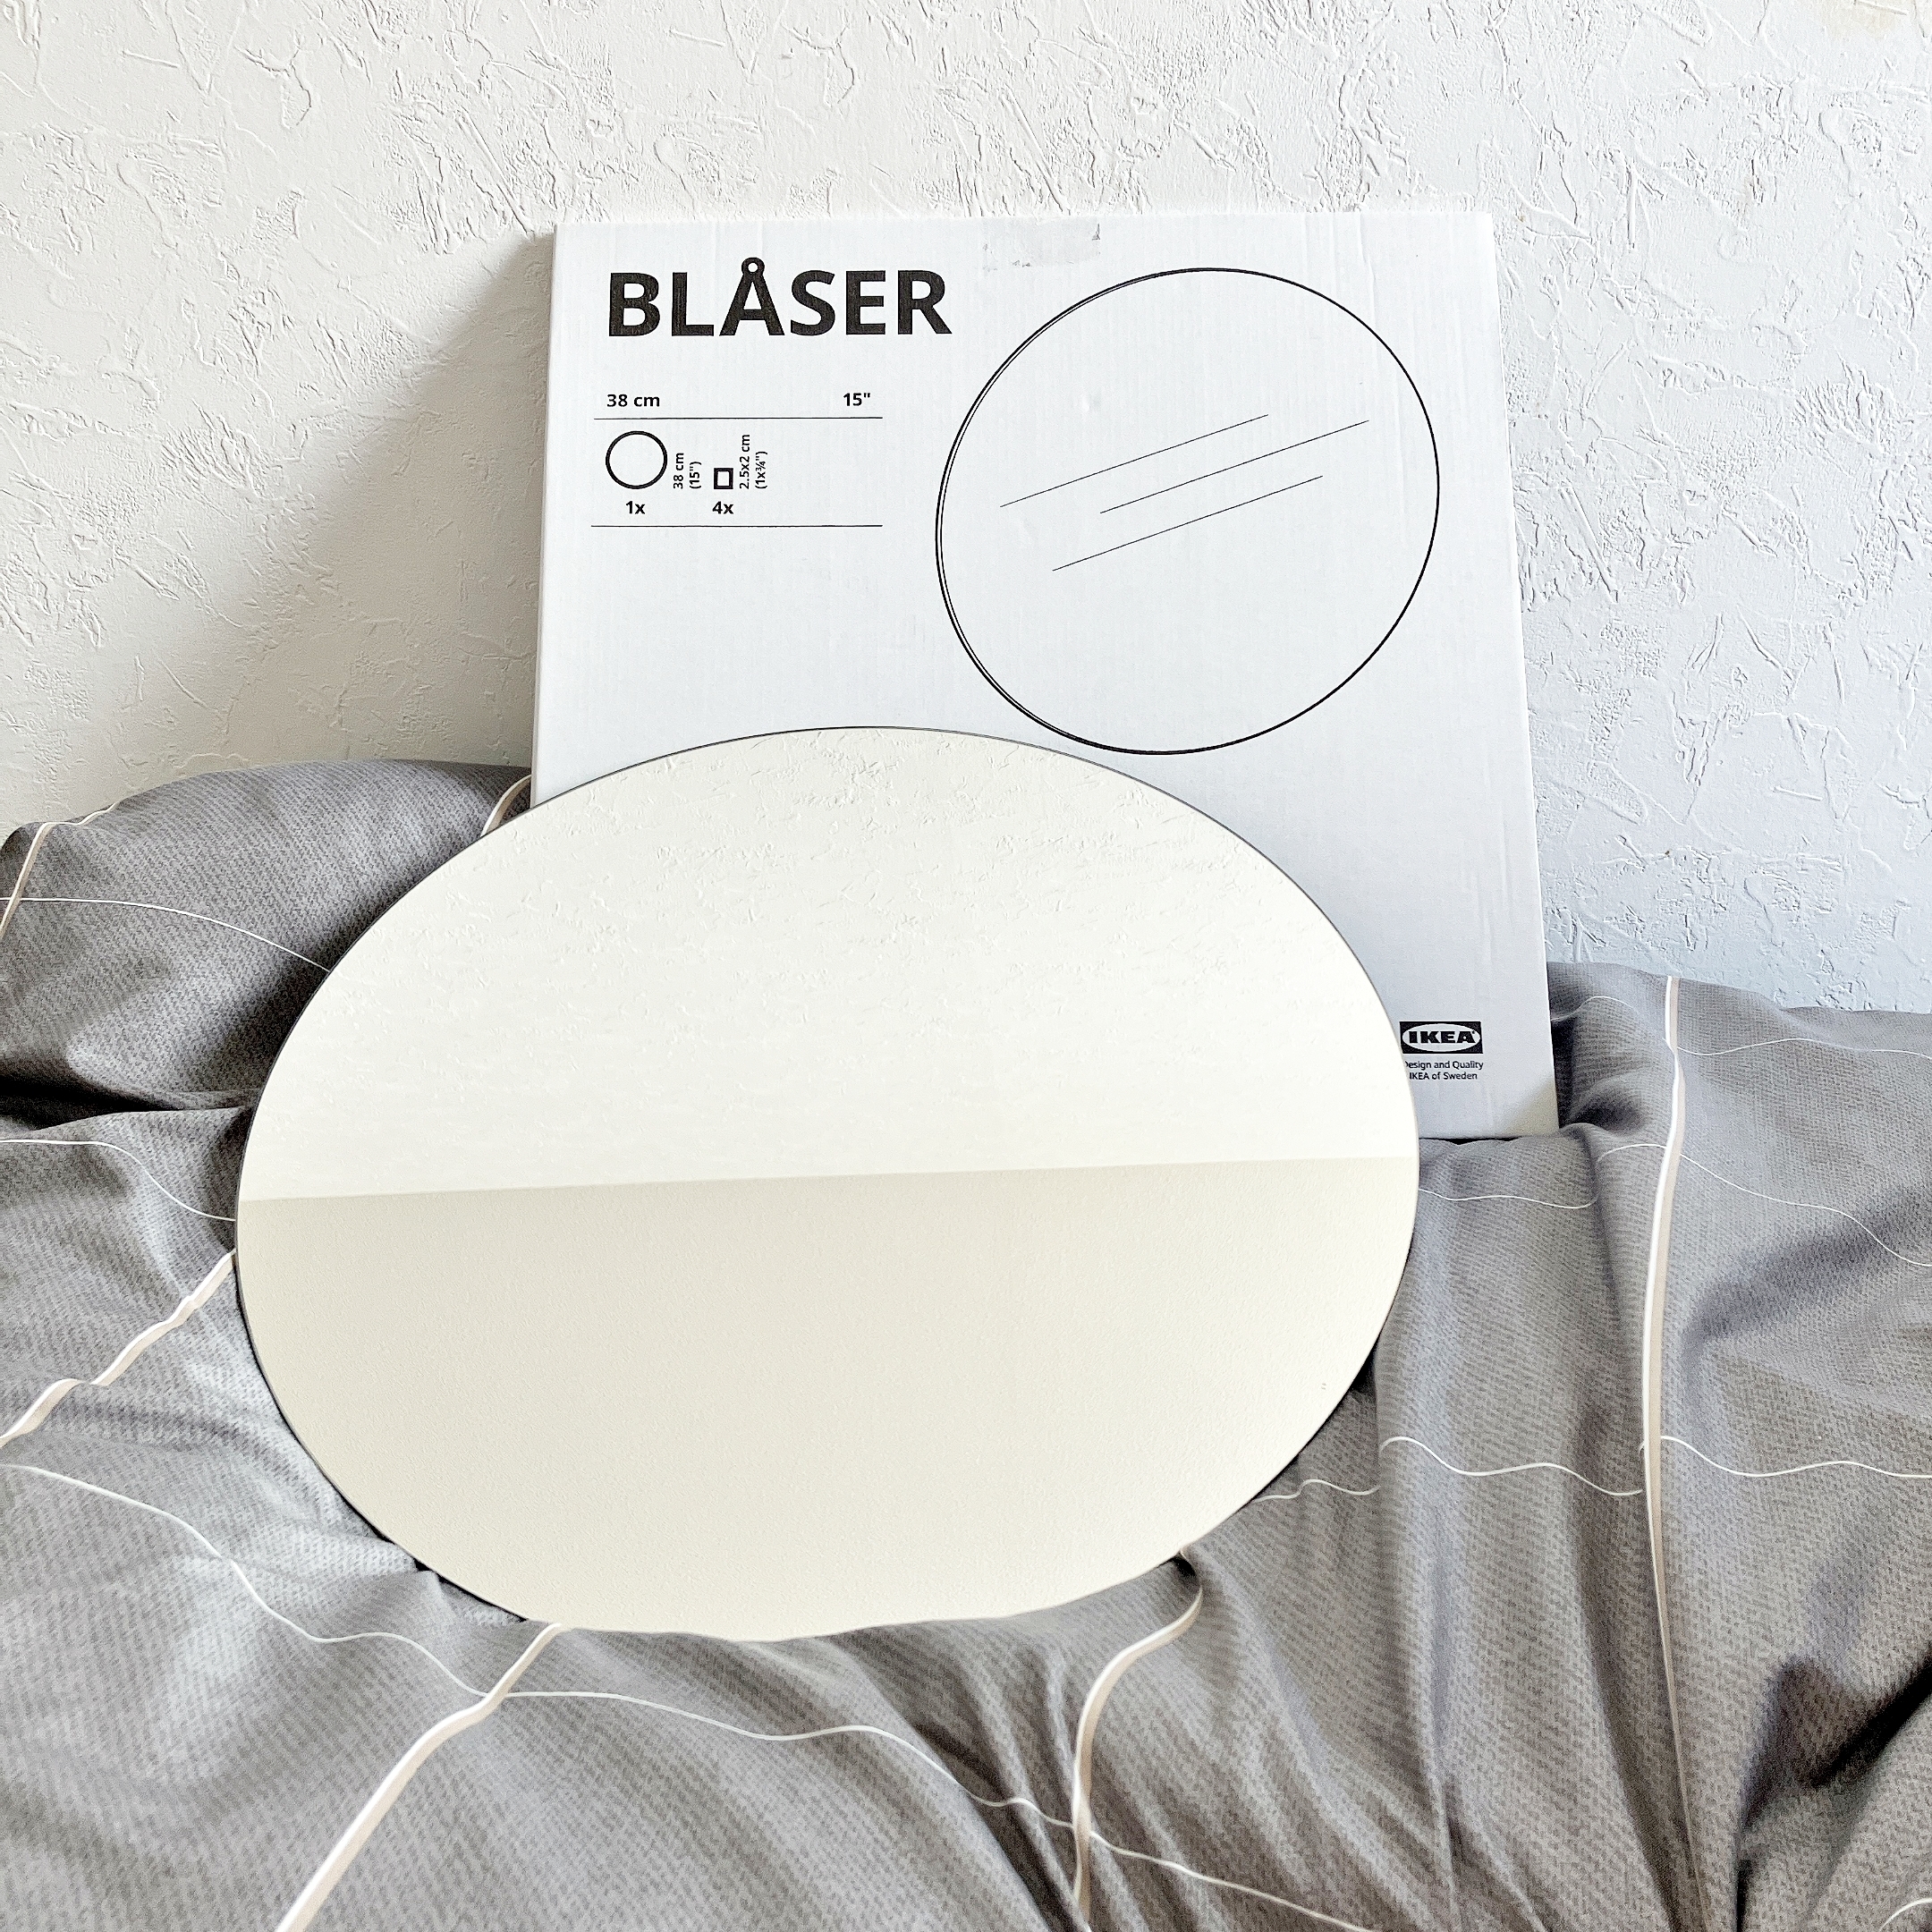 IKEA（イケア）のおすすめミラー「BLÅSER ブローセル ミラー」